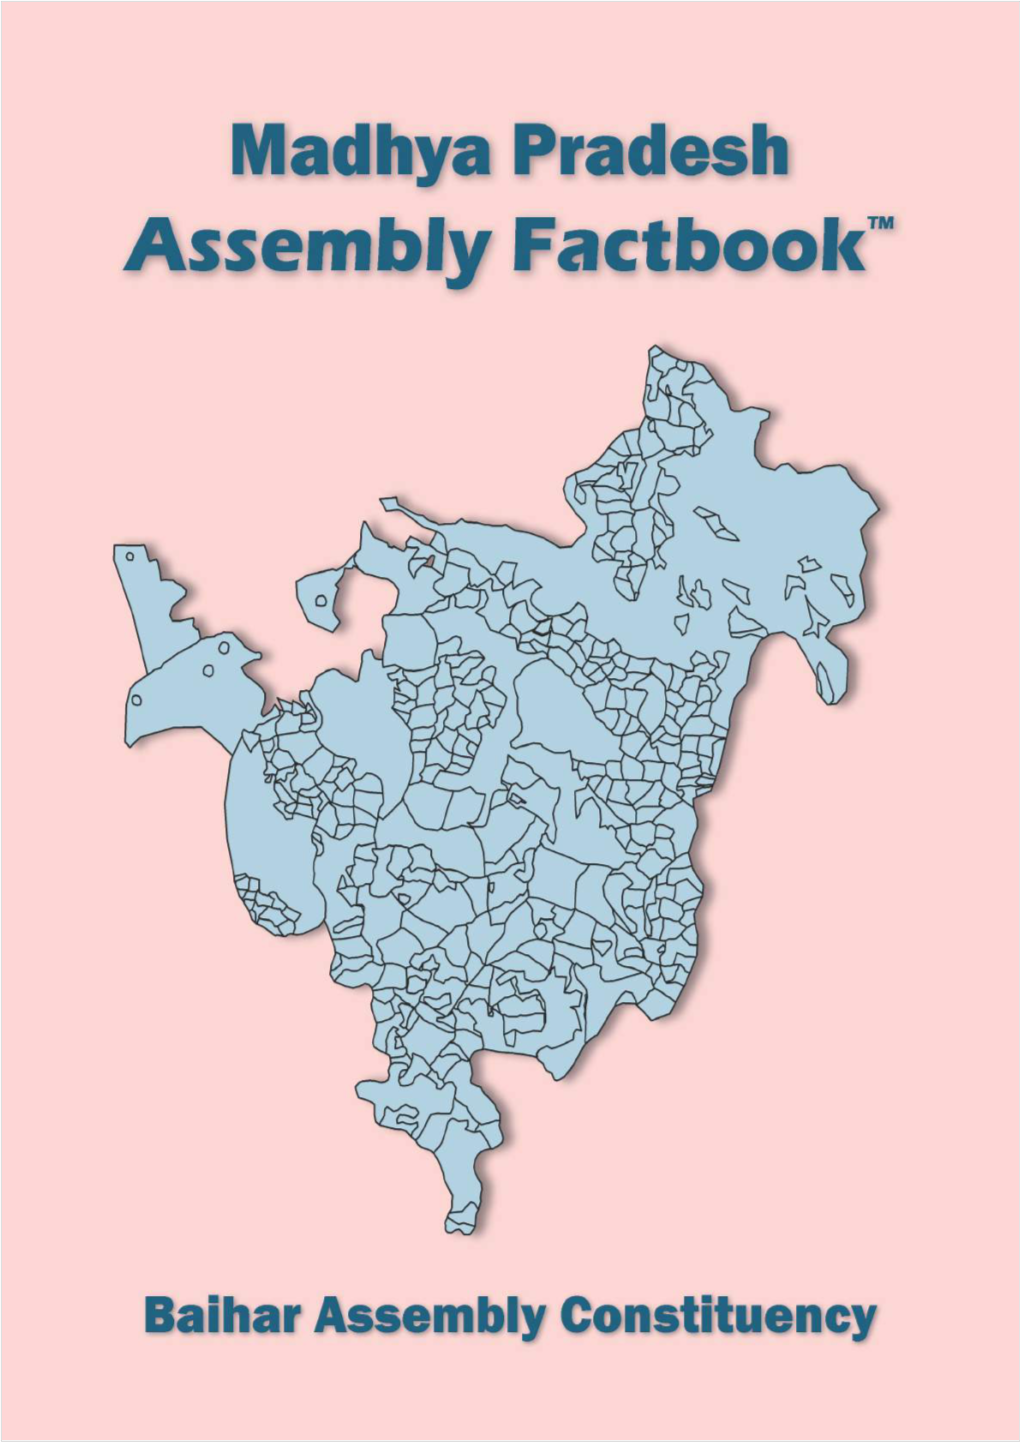 Baihar Assembly Madhya Pradesh Factbook